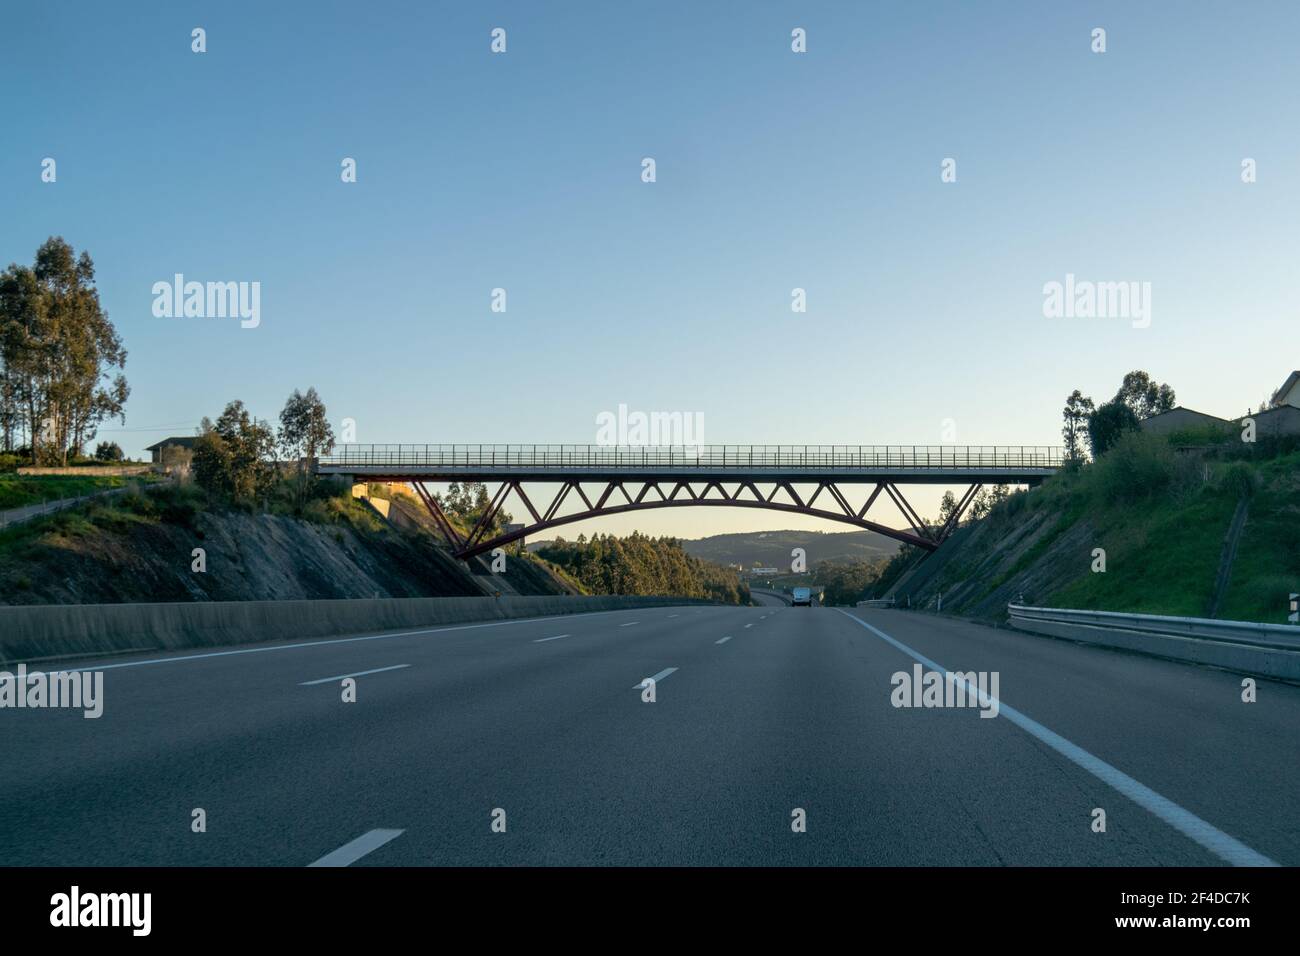 Guida o guida in autostrade o autostrade. Autostrade portoghesi a pagamento da Brisa Auto-Estradas de Portugal. Engeneering ponte di metallo. Autoroute Foto Stock